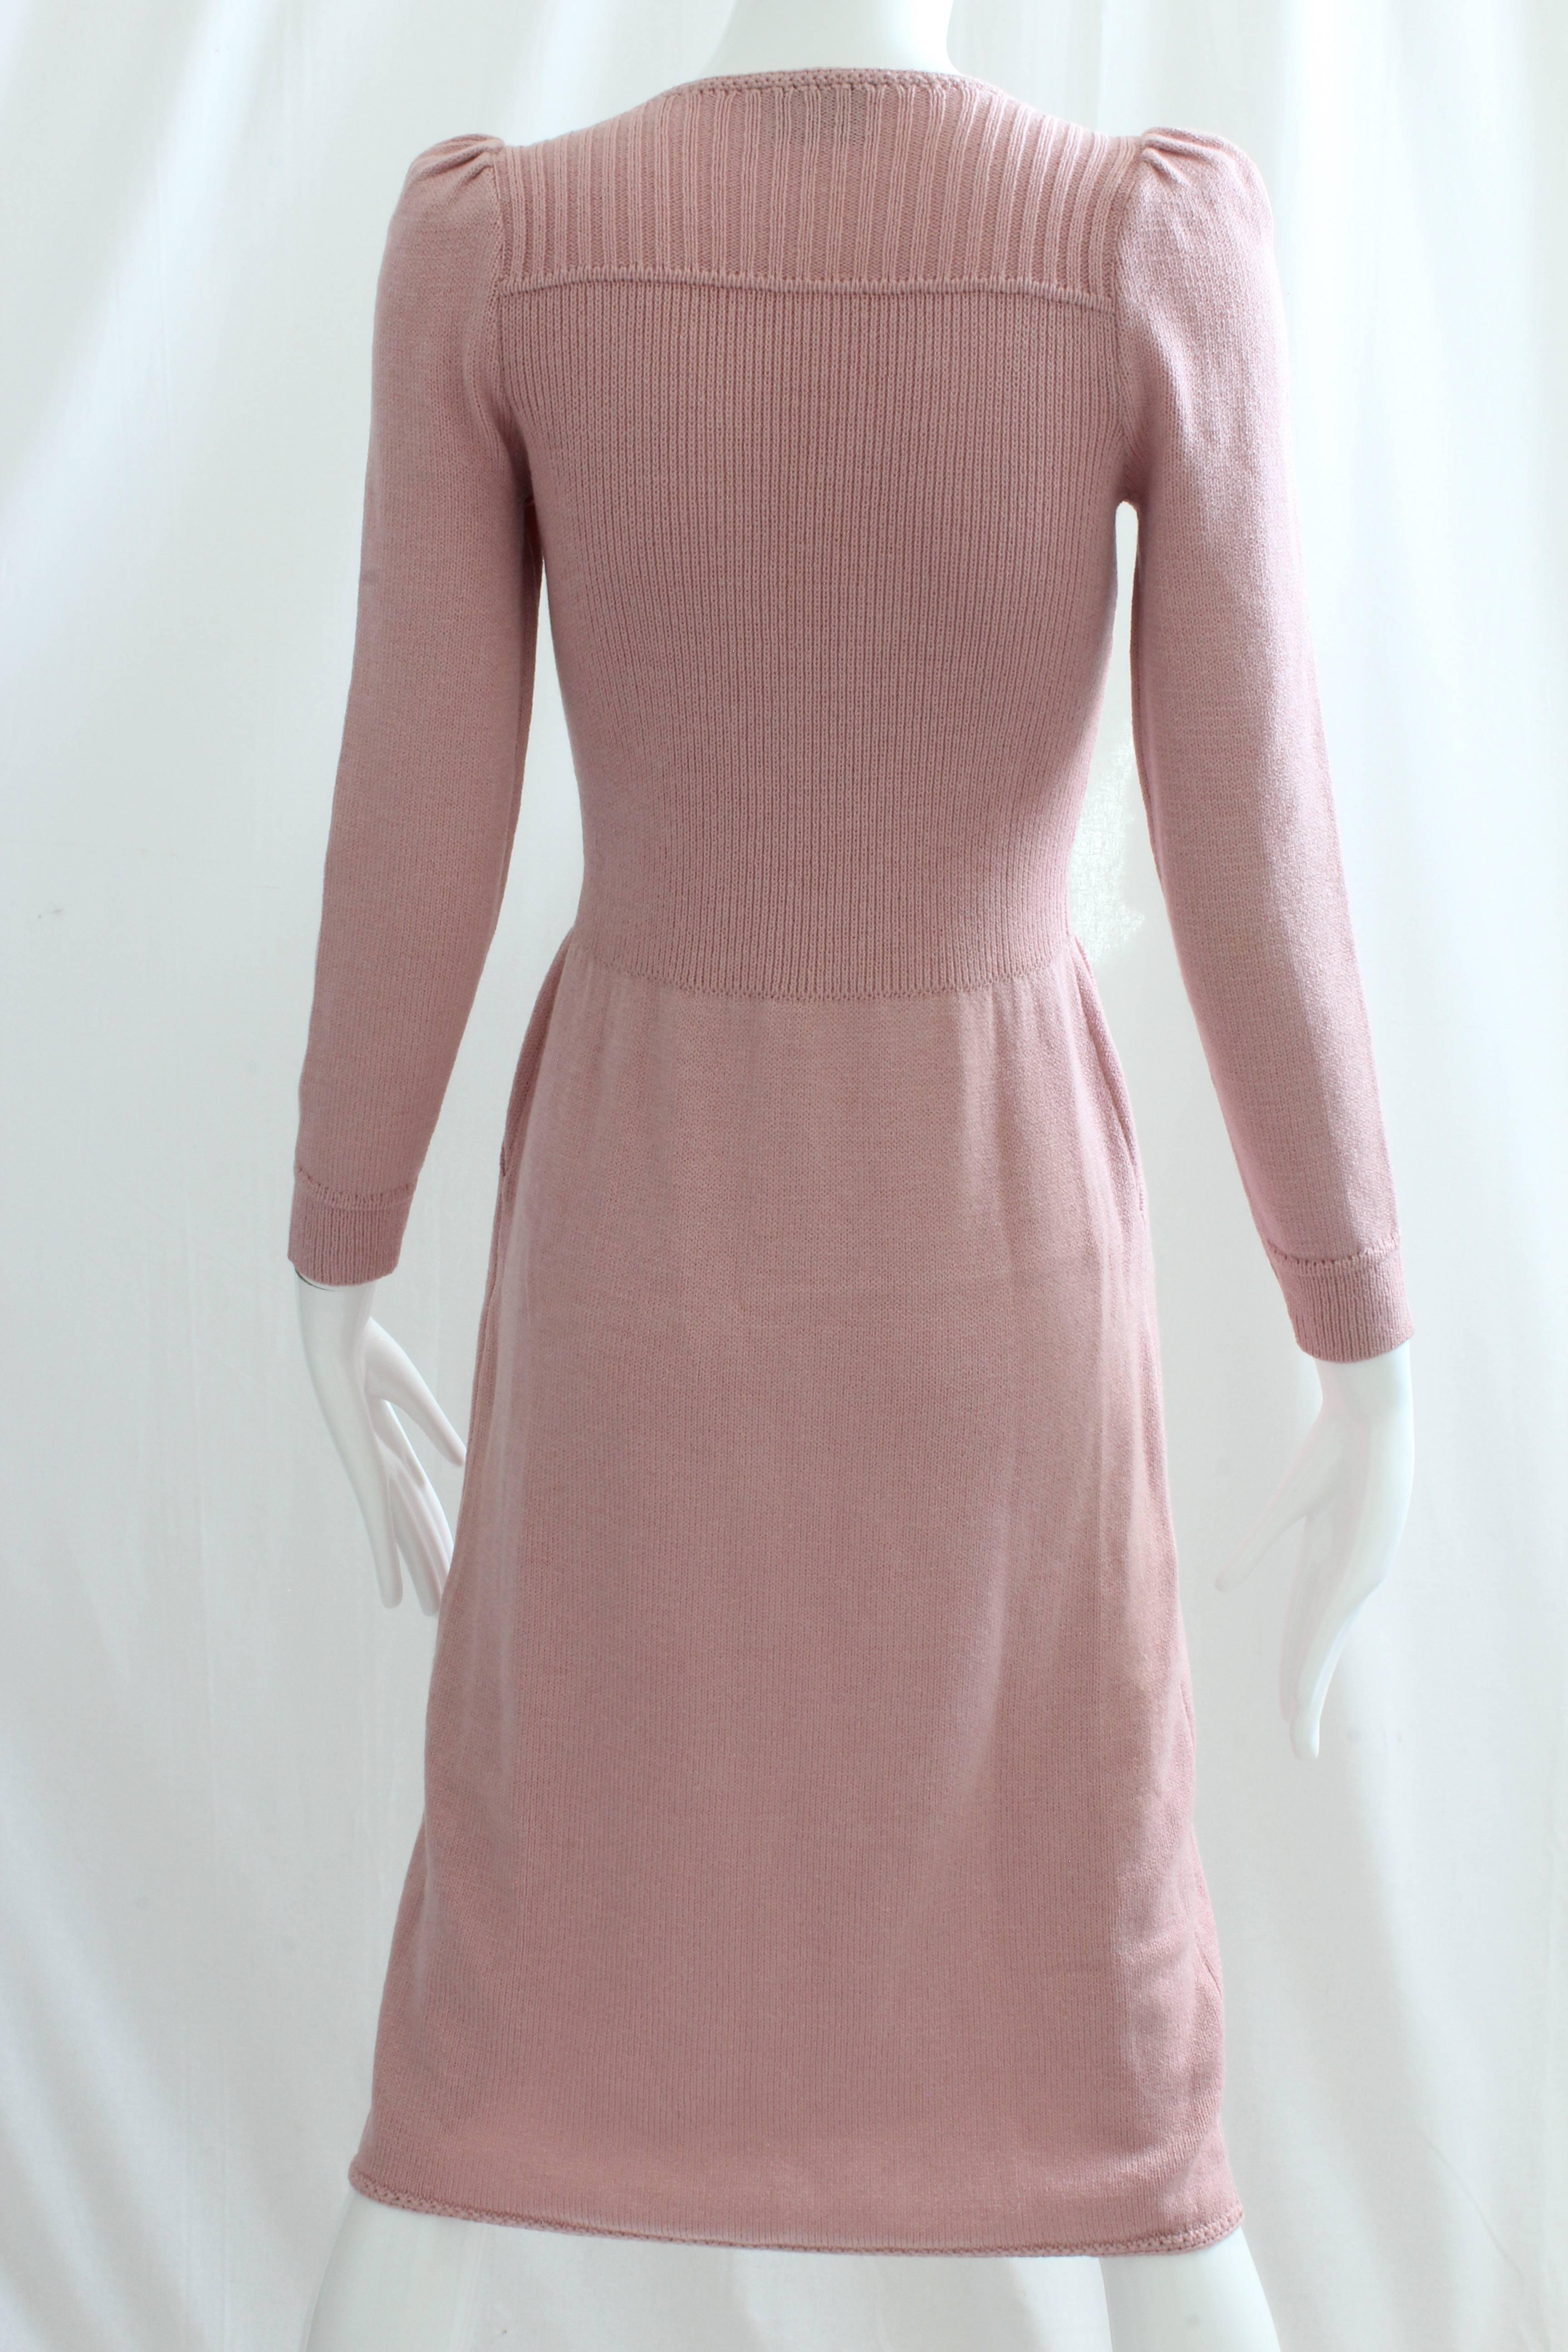 St John by Marie Gray Pink Knit Dress Vintage 70s Sz M 1